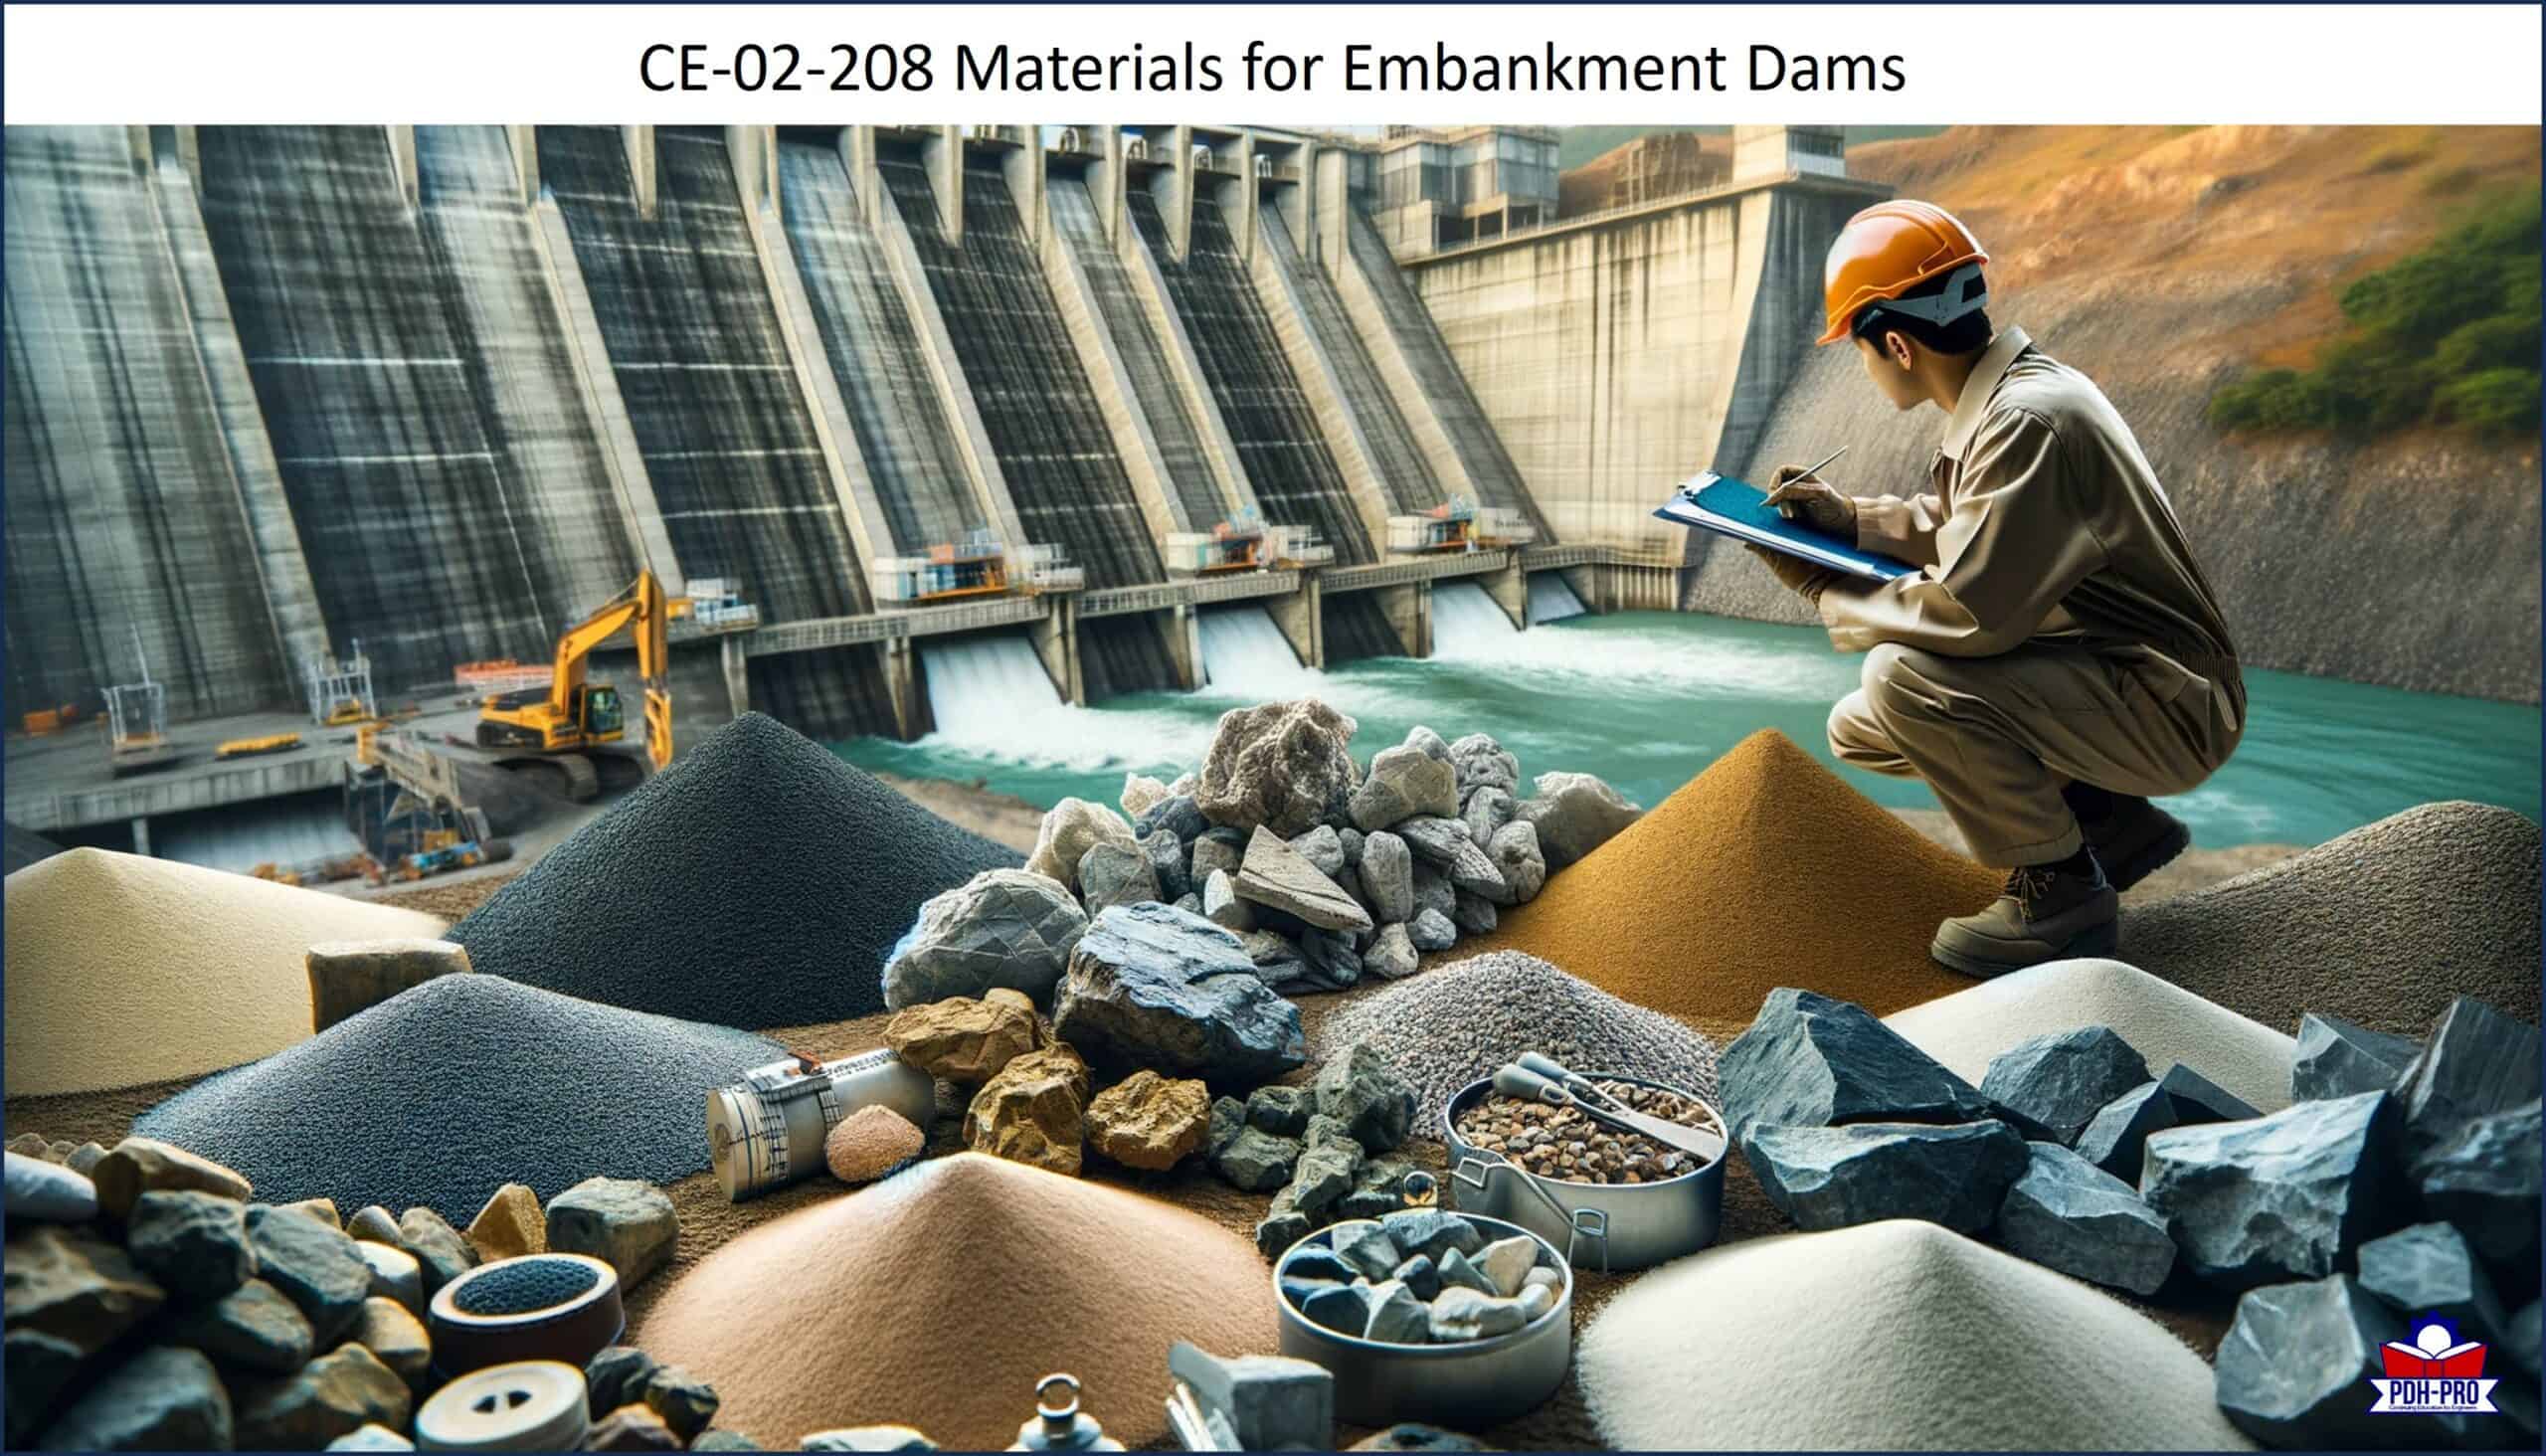 Materials for Embankment Dams